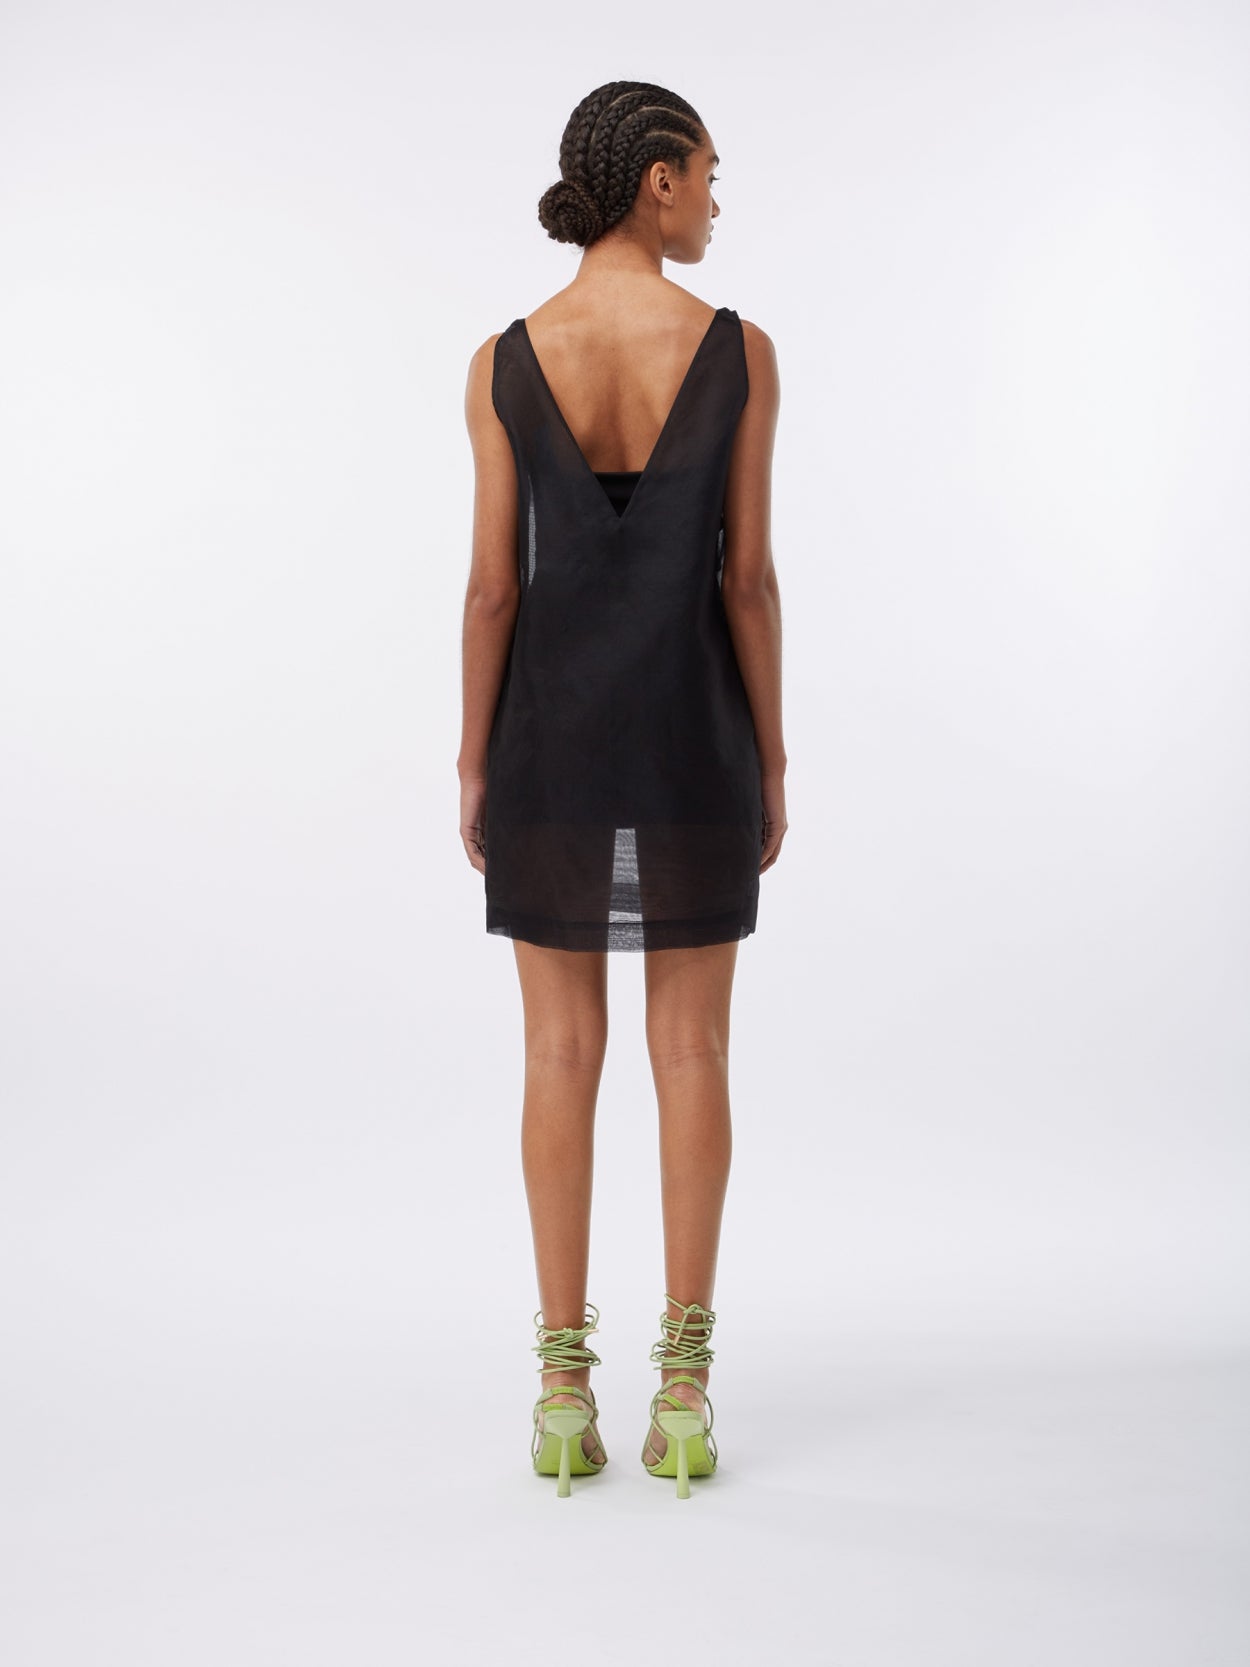 model wearing a black mesh overlay dress